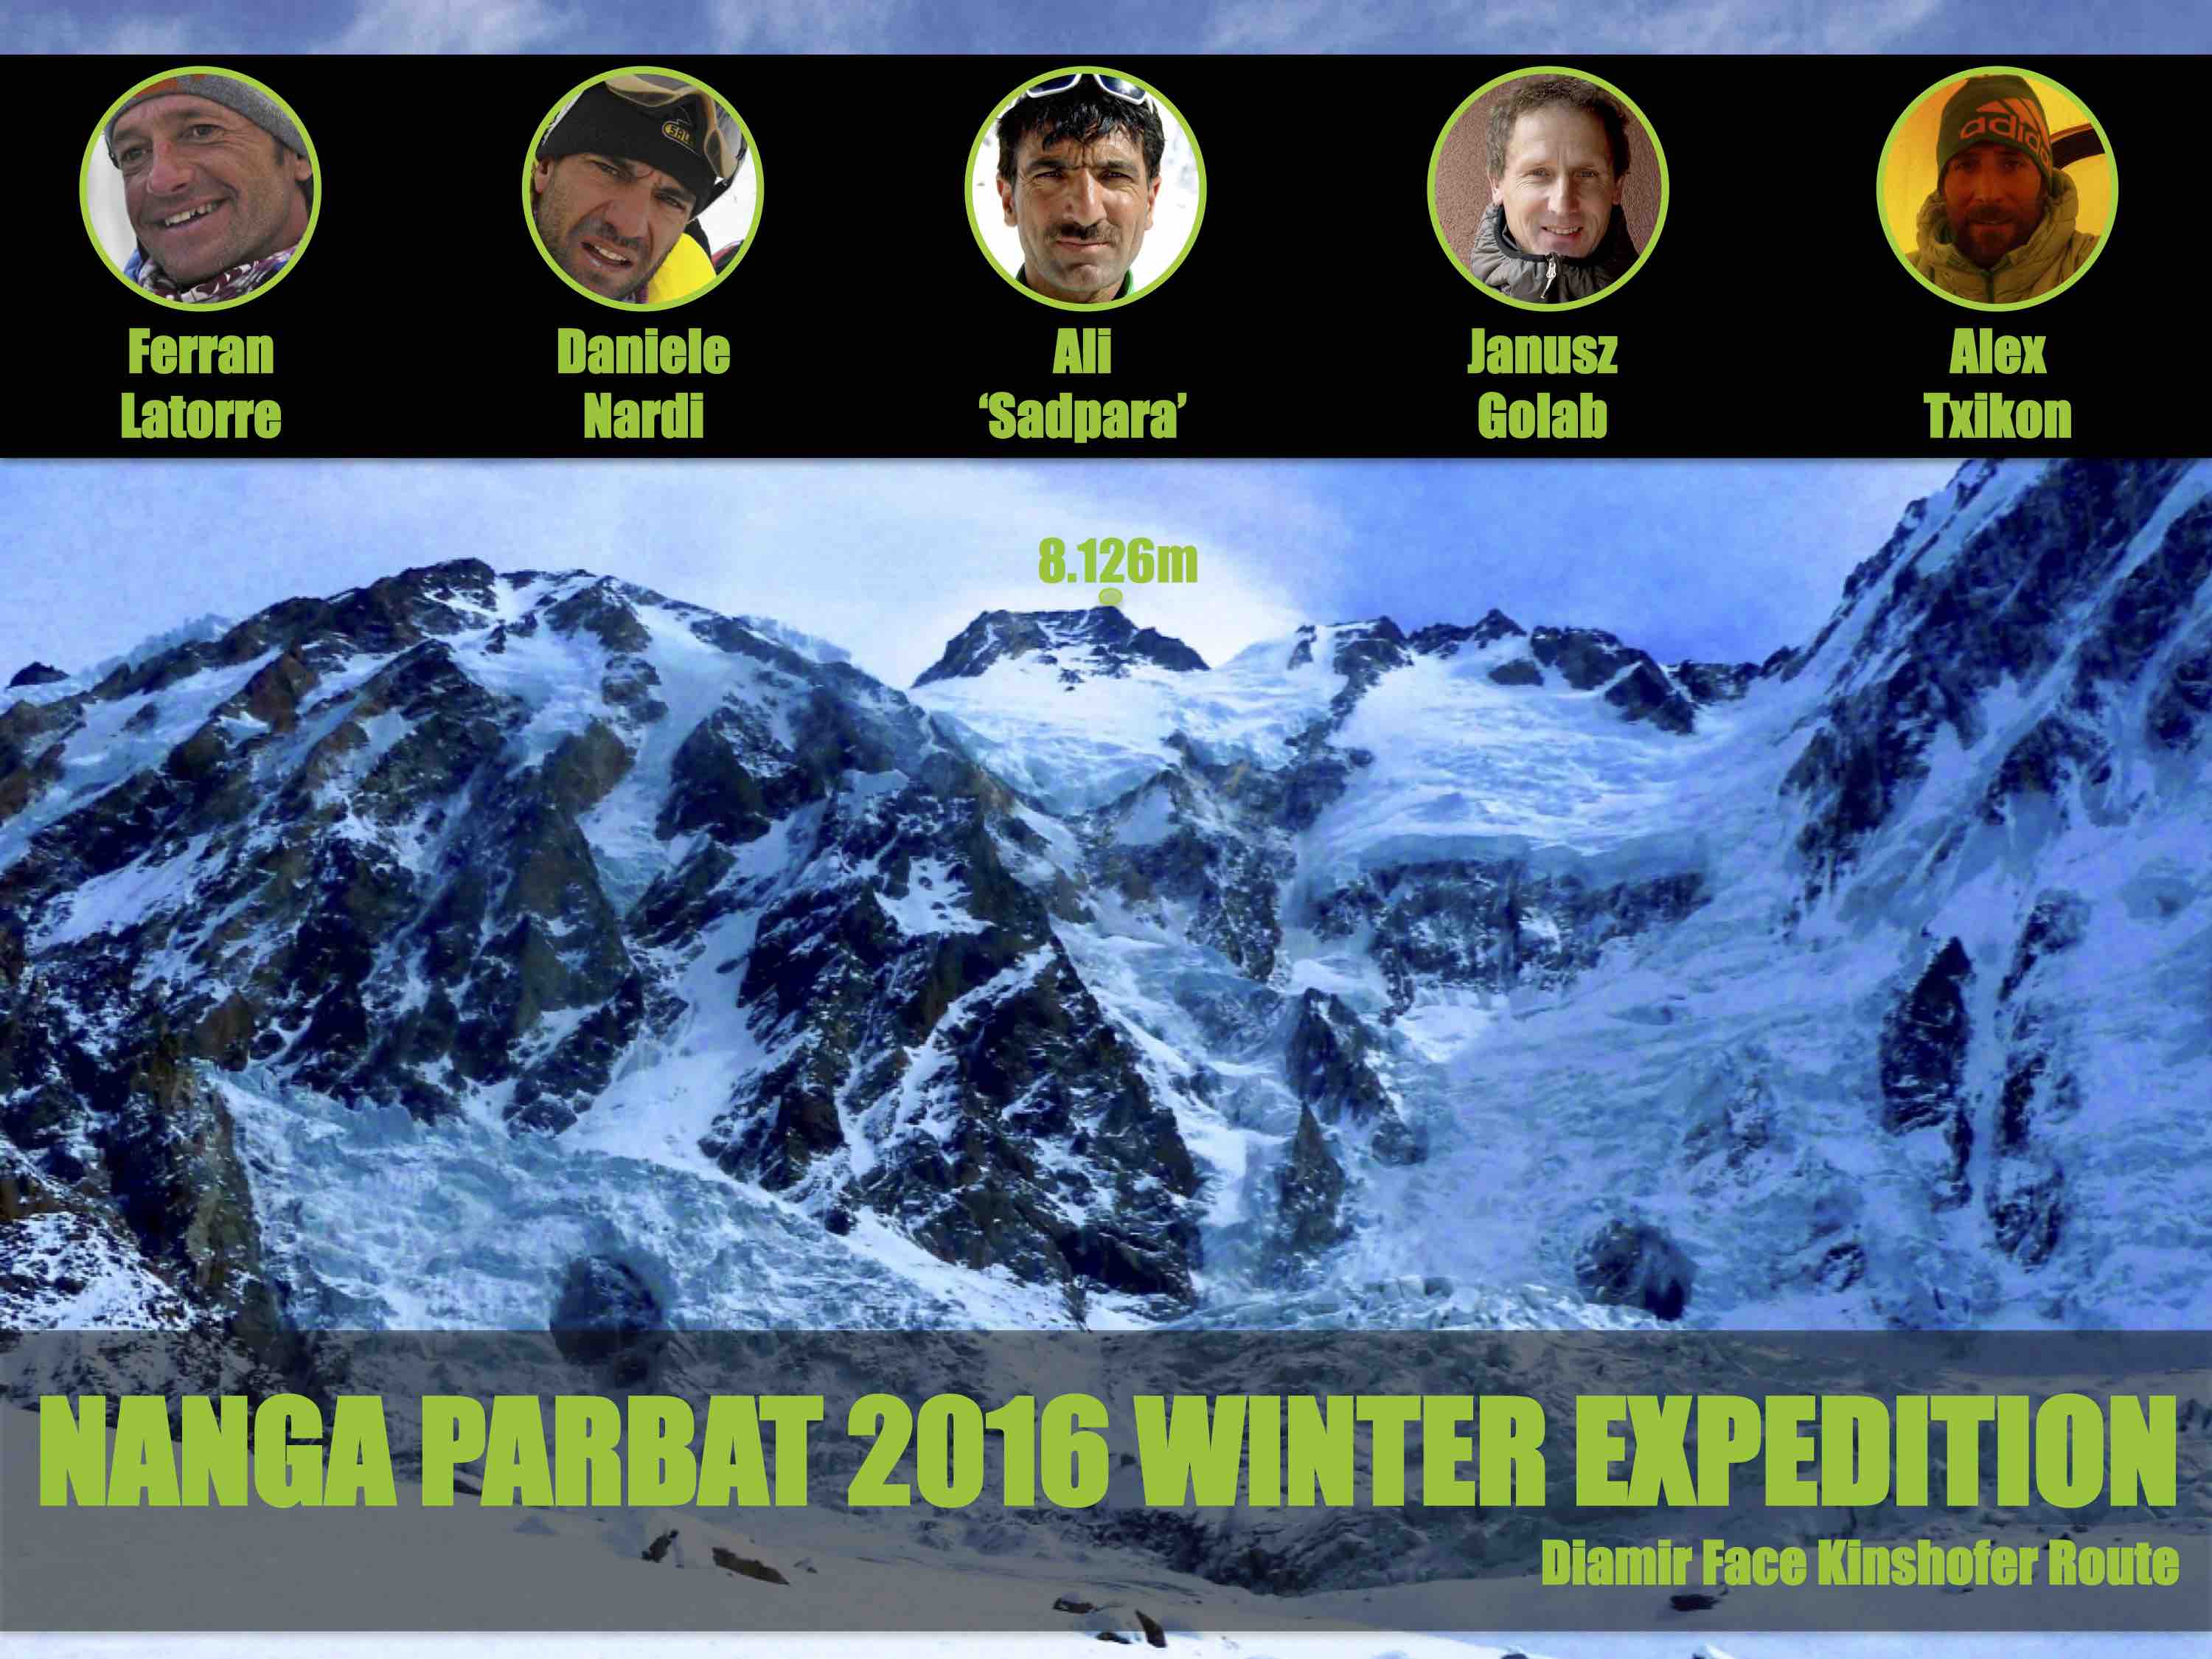  Состав команды "Nanga Parbat 2016 Winter Expedition"